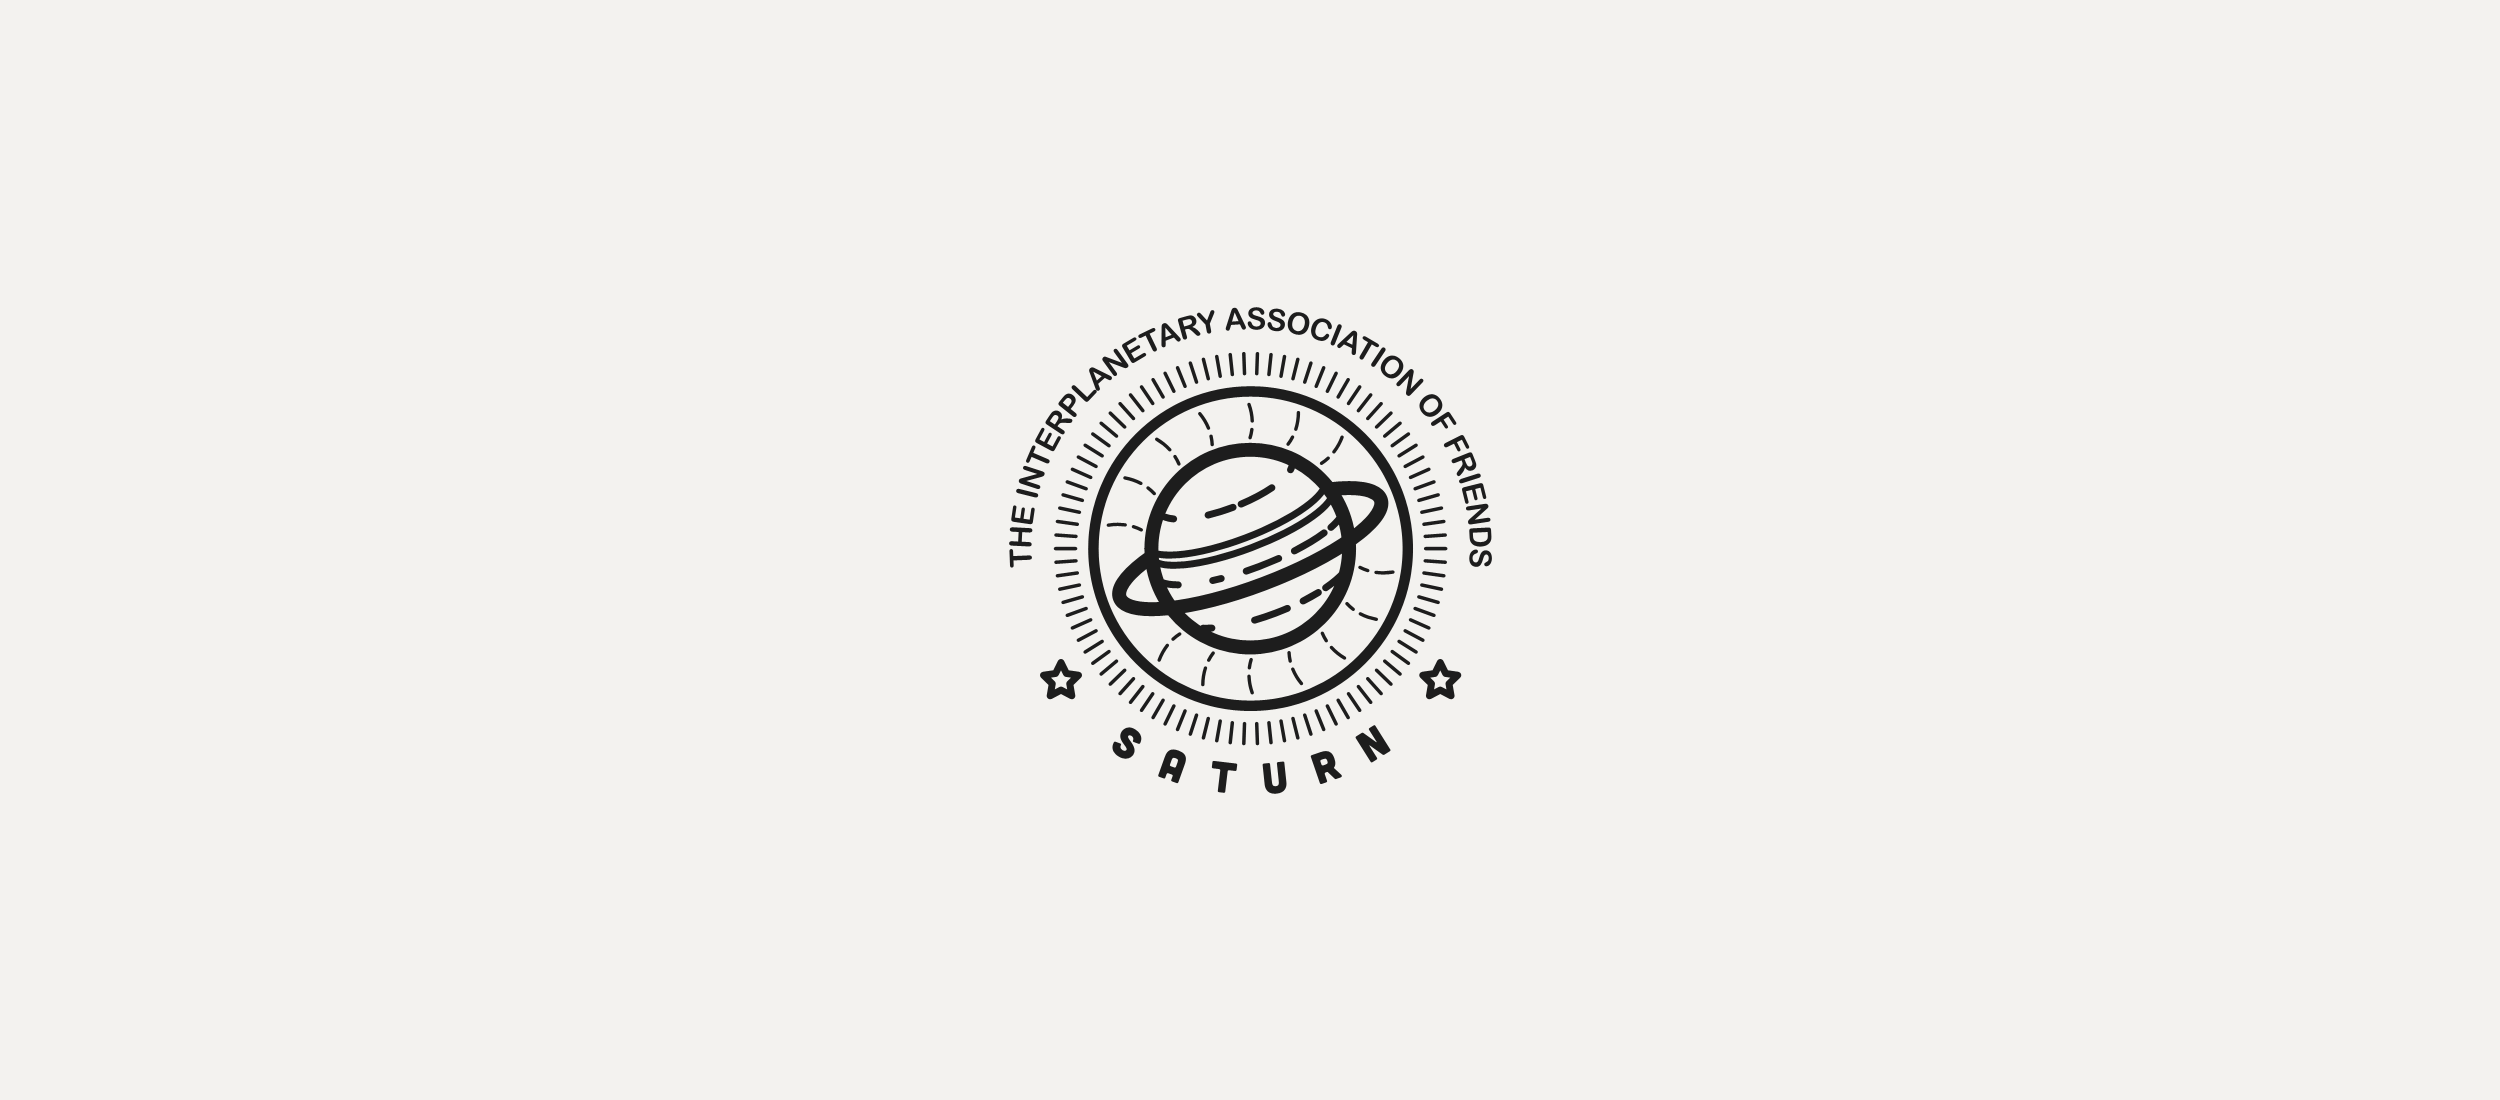 Interplanetary Association Of Friends logo design.